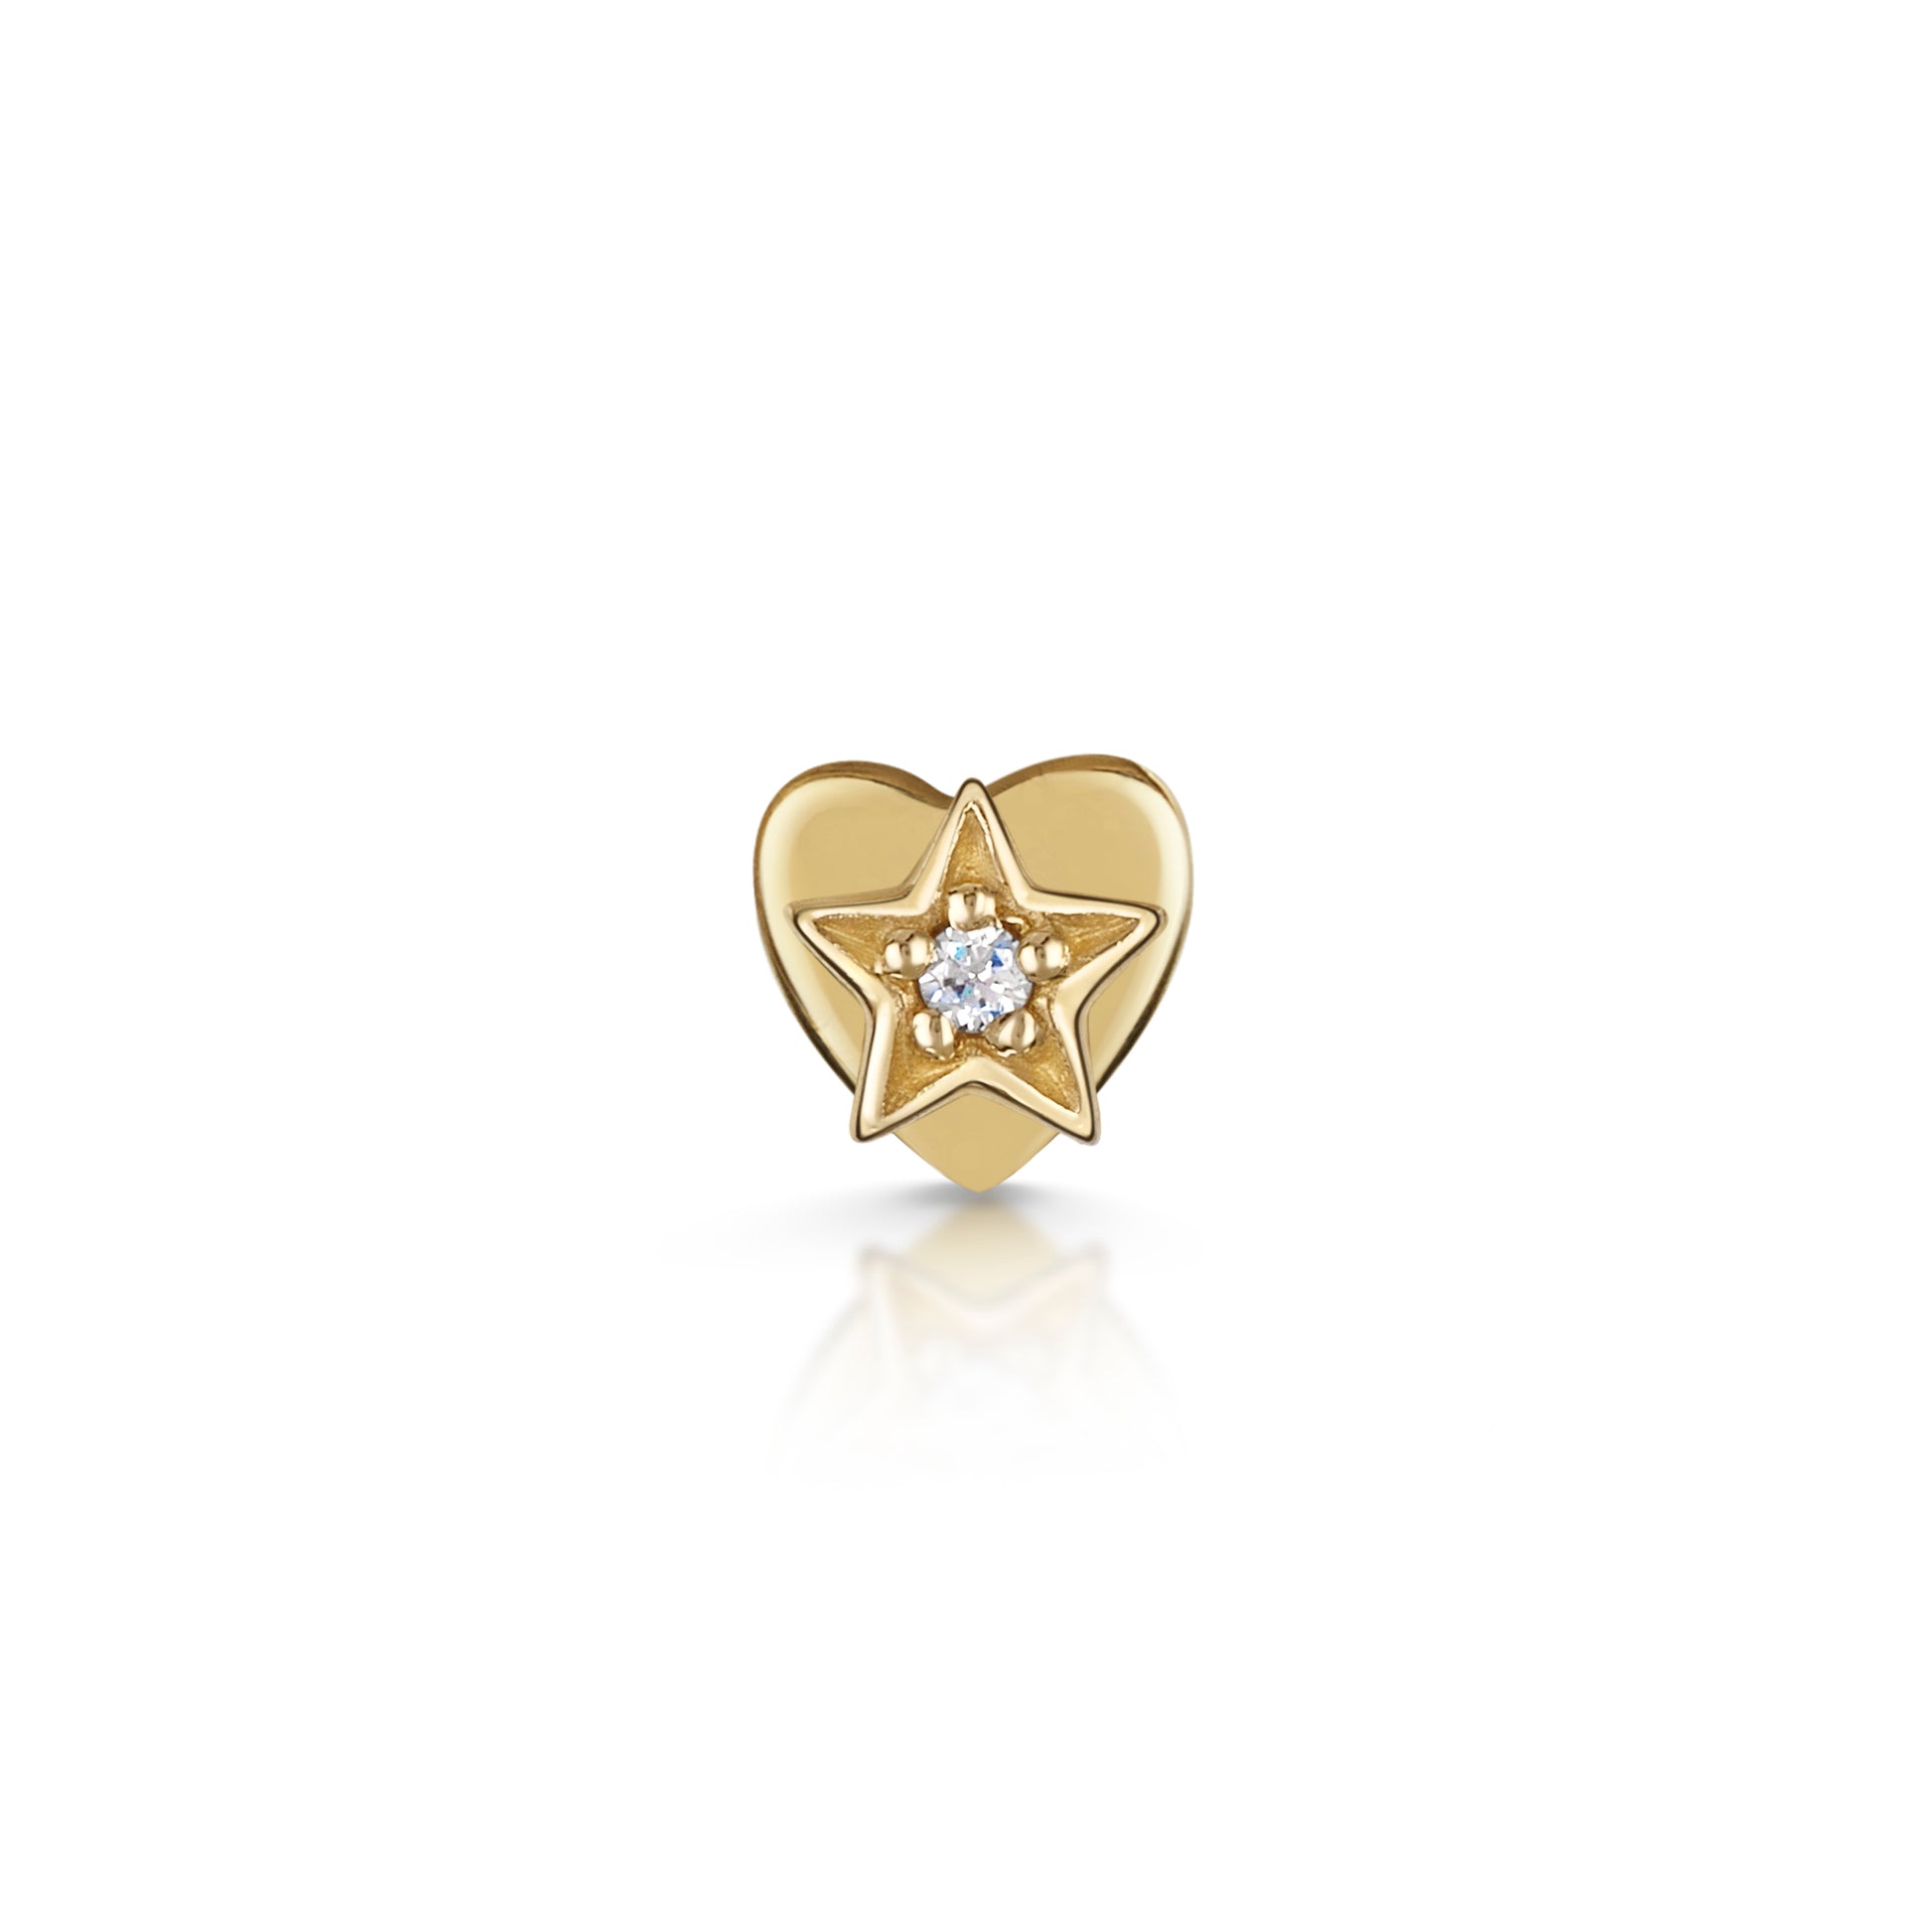 14k solid yellow gold Nova star flat back labret stud earring 8mm - LAURA BOND jewellery